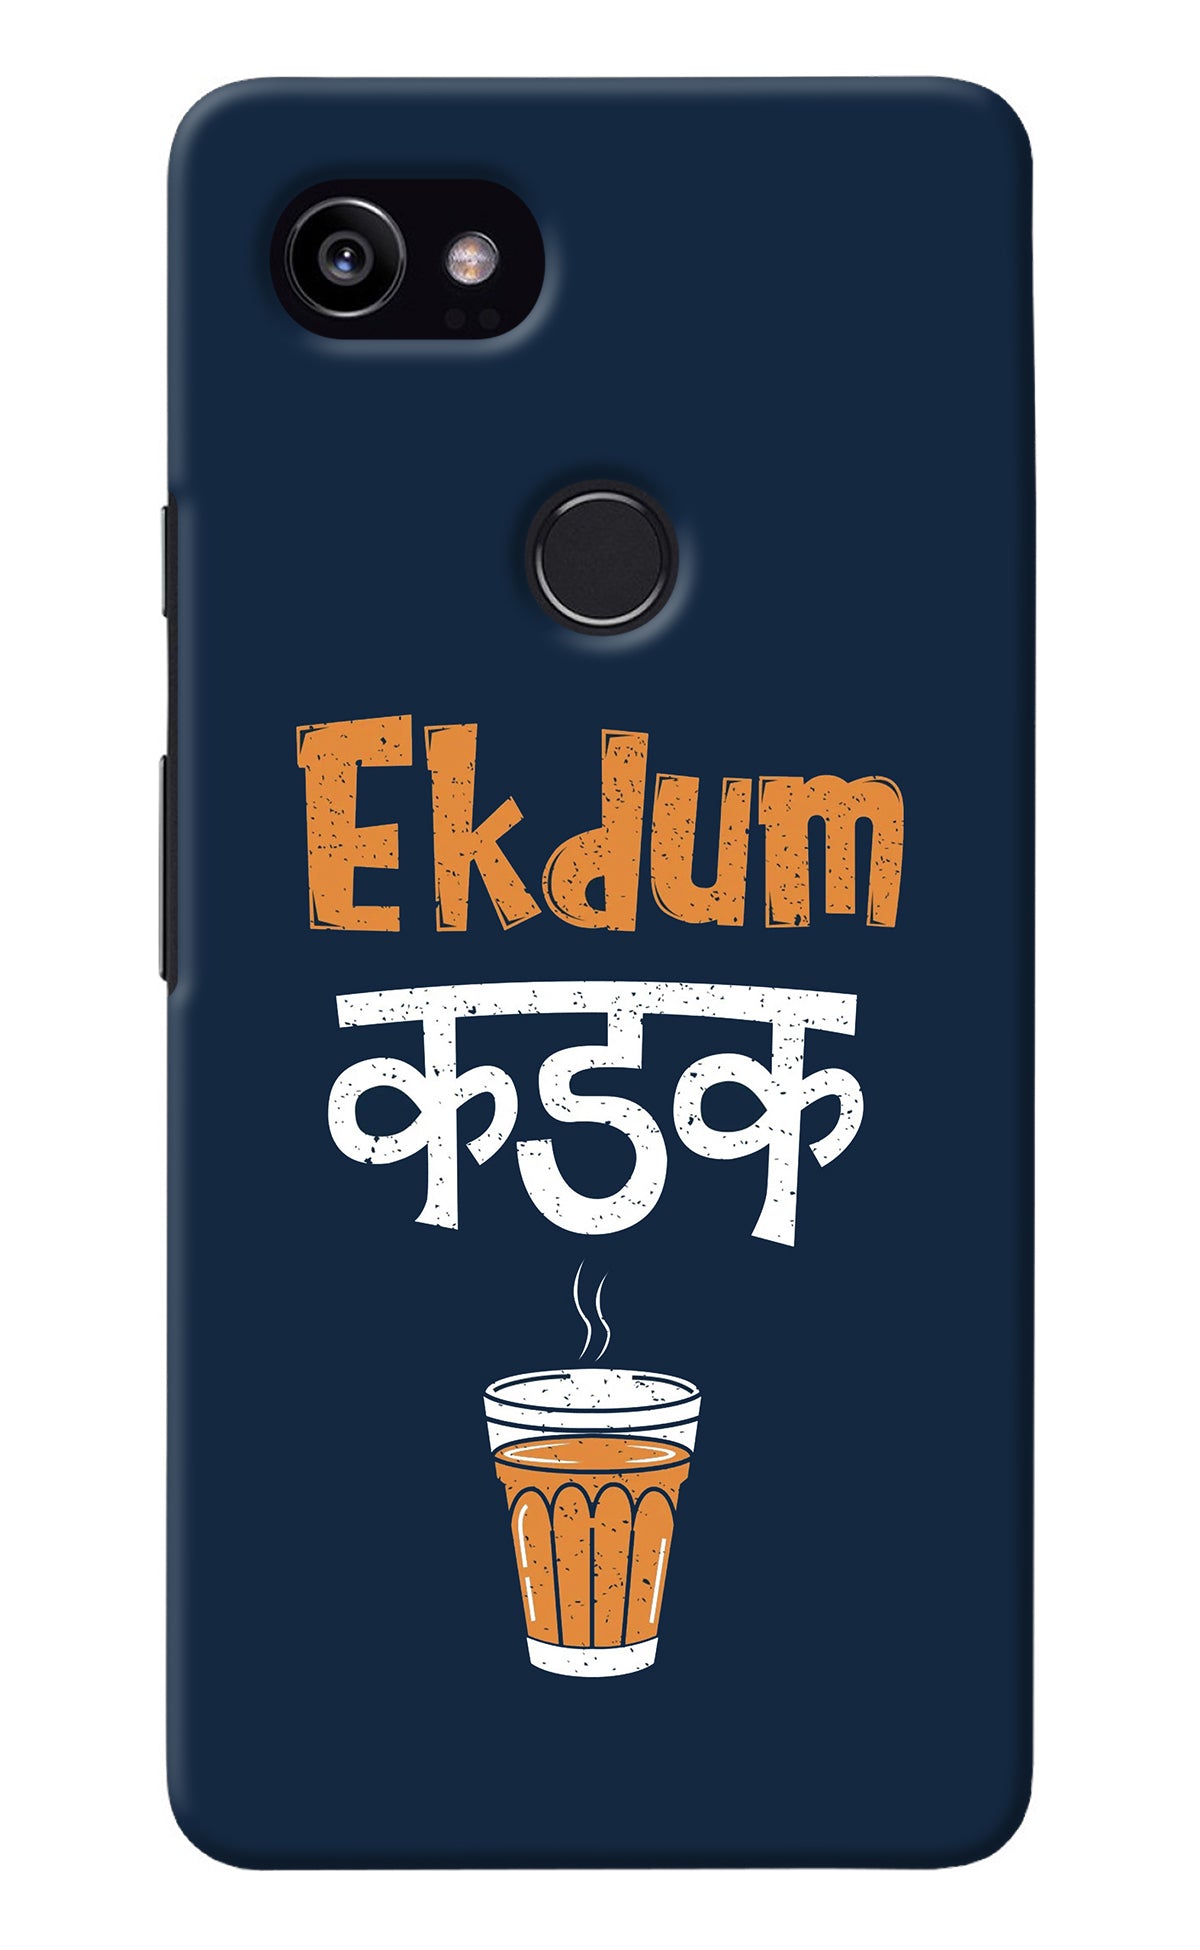 Ekdum Kadak Chai Google Pixel 2 XL Back Cover